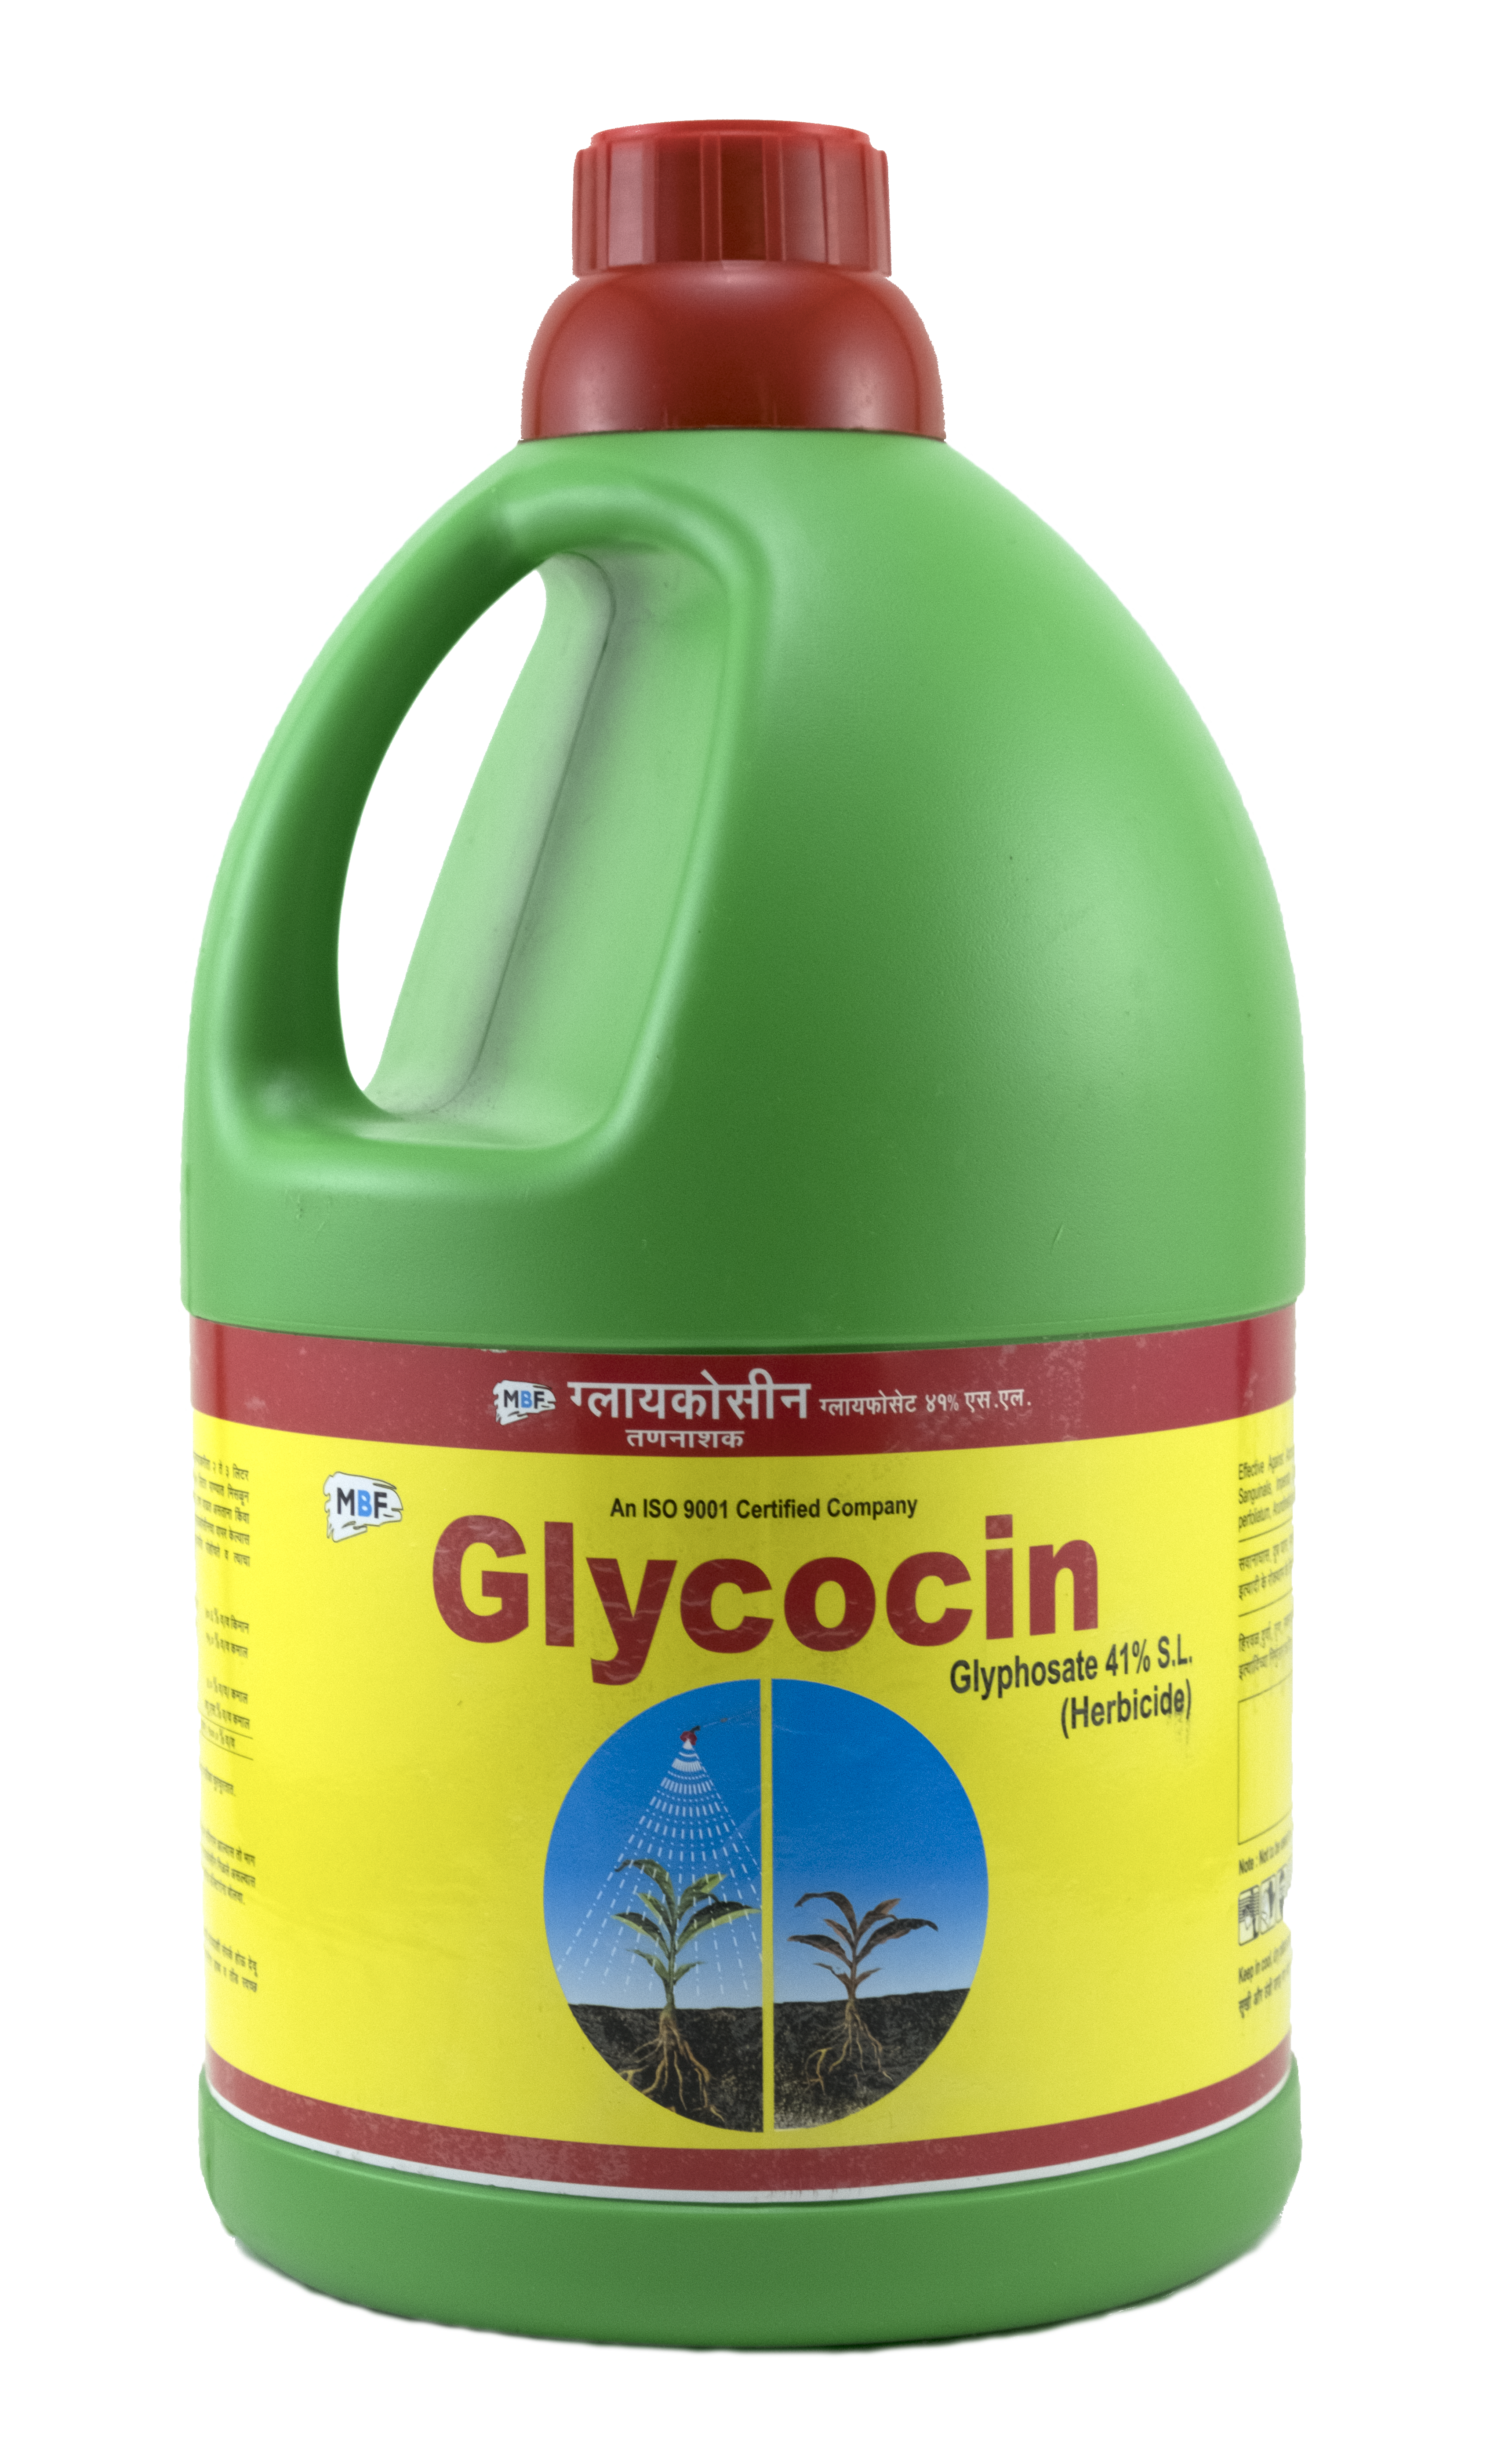 MBF Glycocin